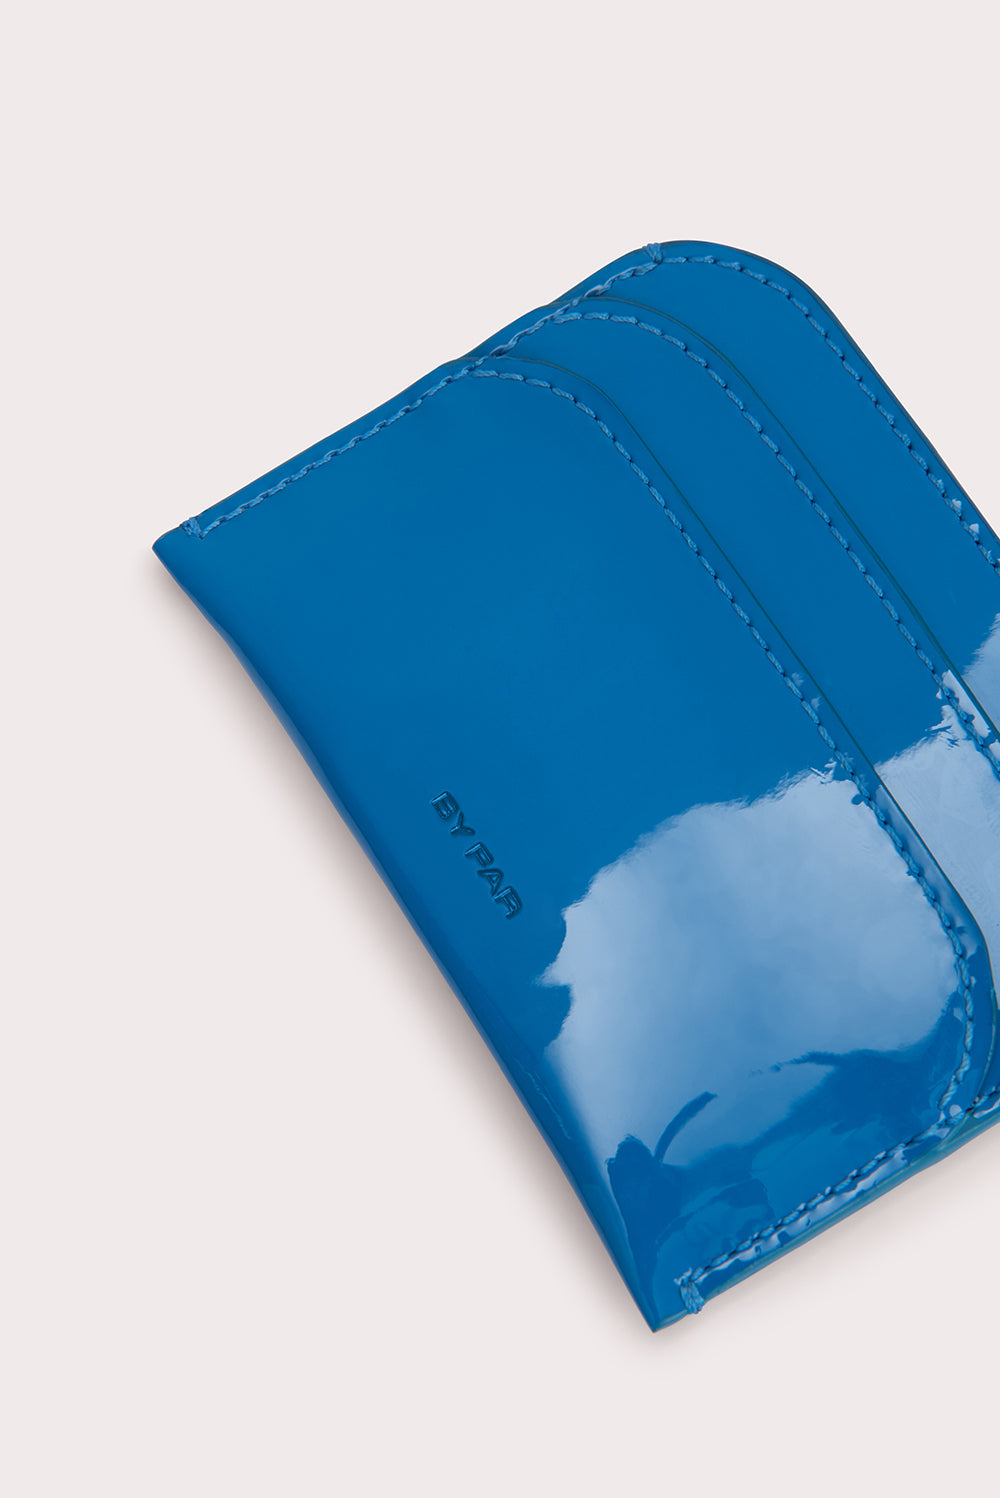 Horizon Card Holder Cerulean Patent Leather